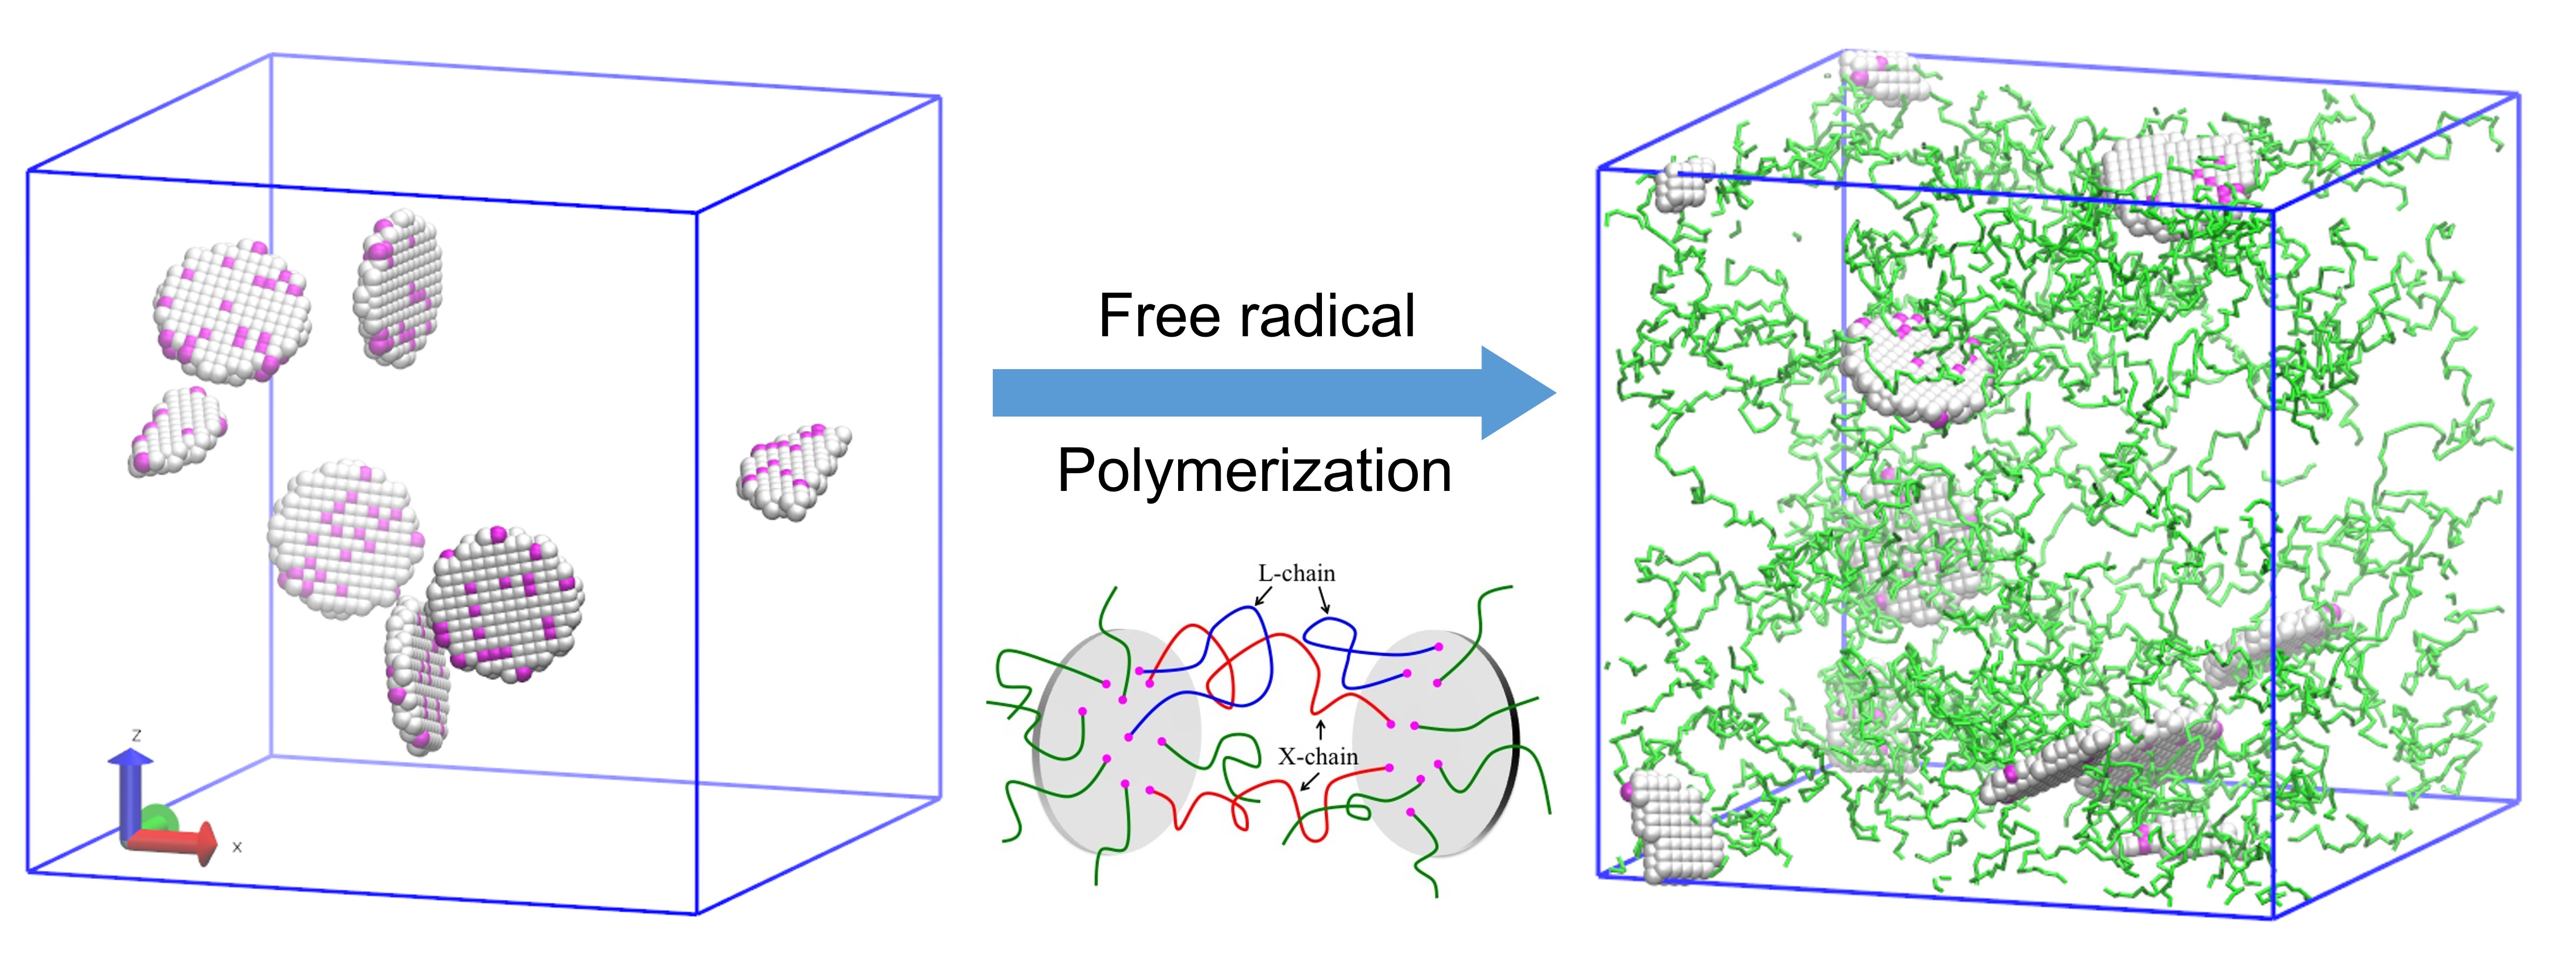 Polymer-clay nanocomposite gels